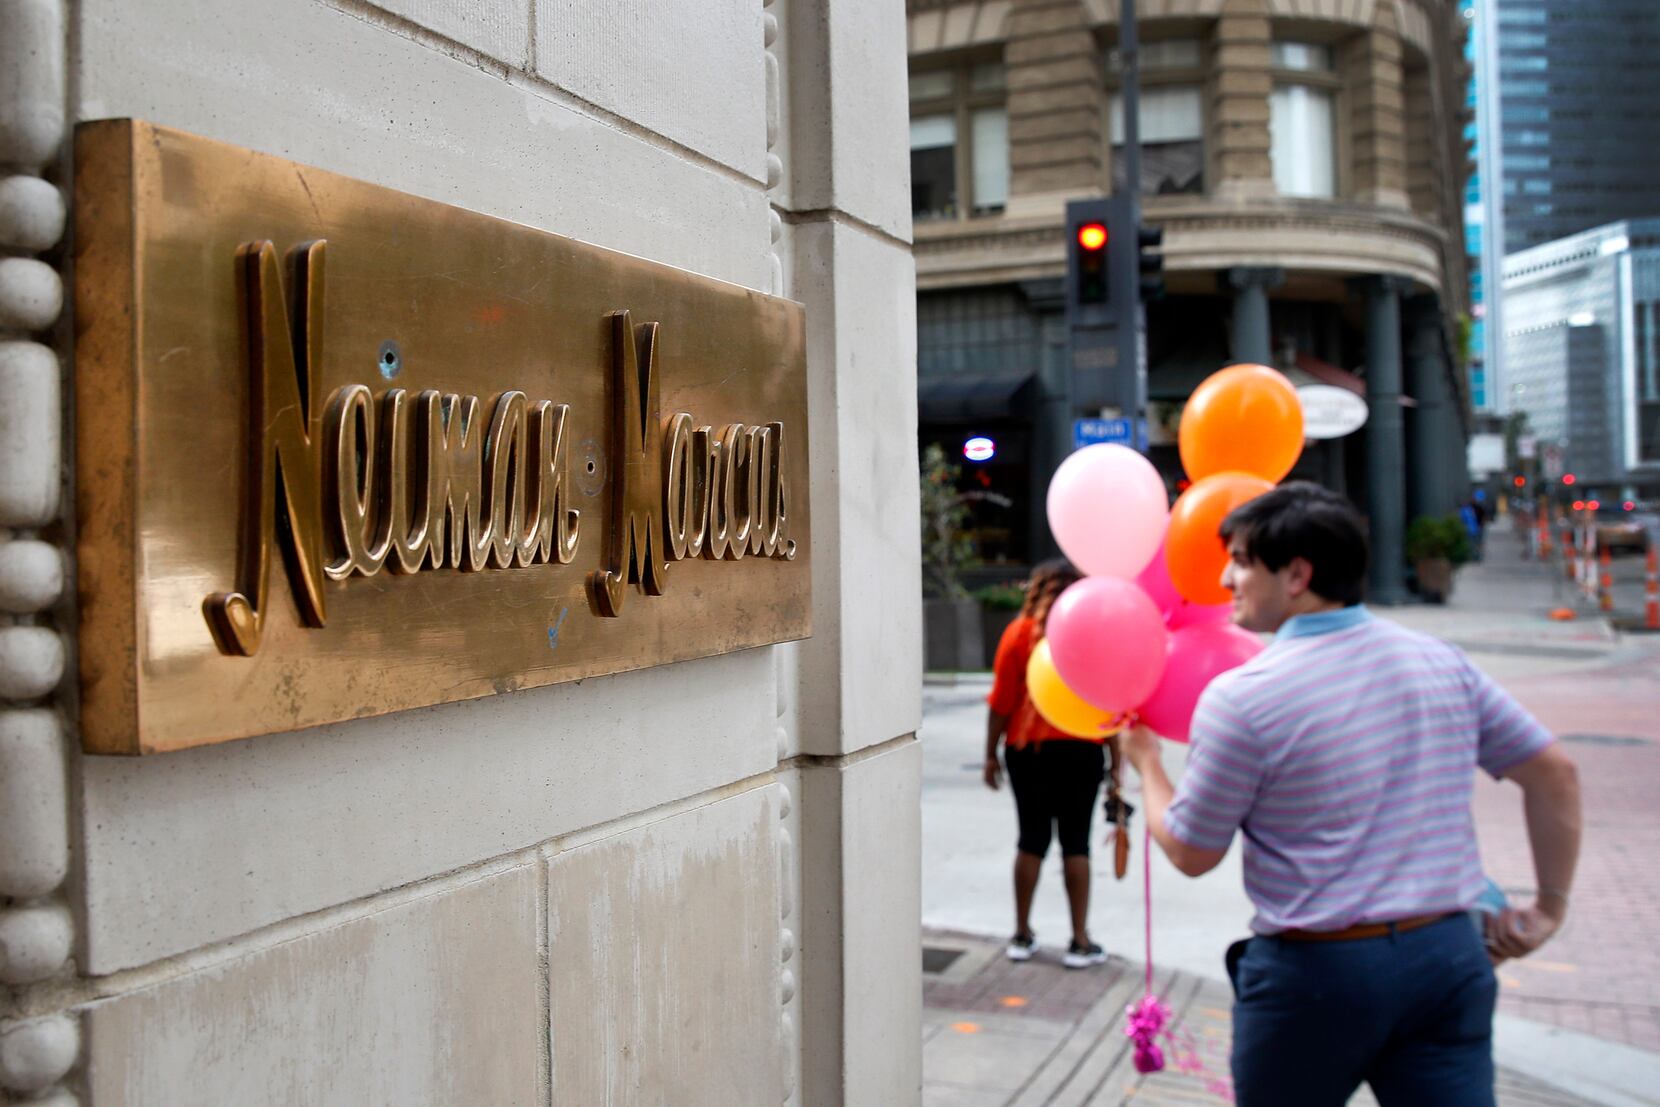 Neiman Marcus becomes second major retailer to seek Chapter 11